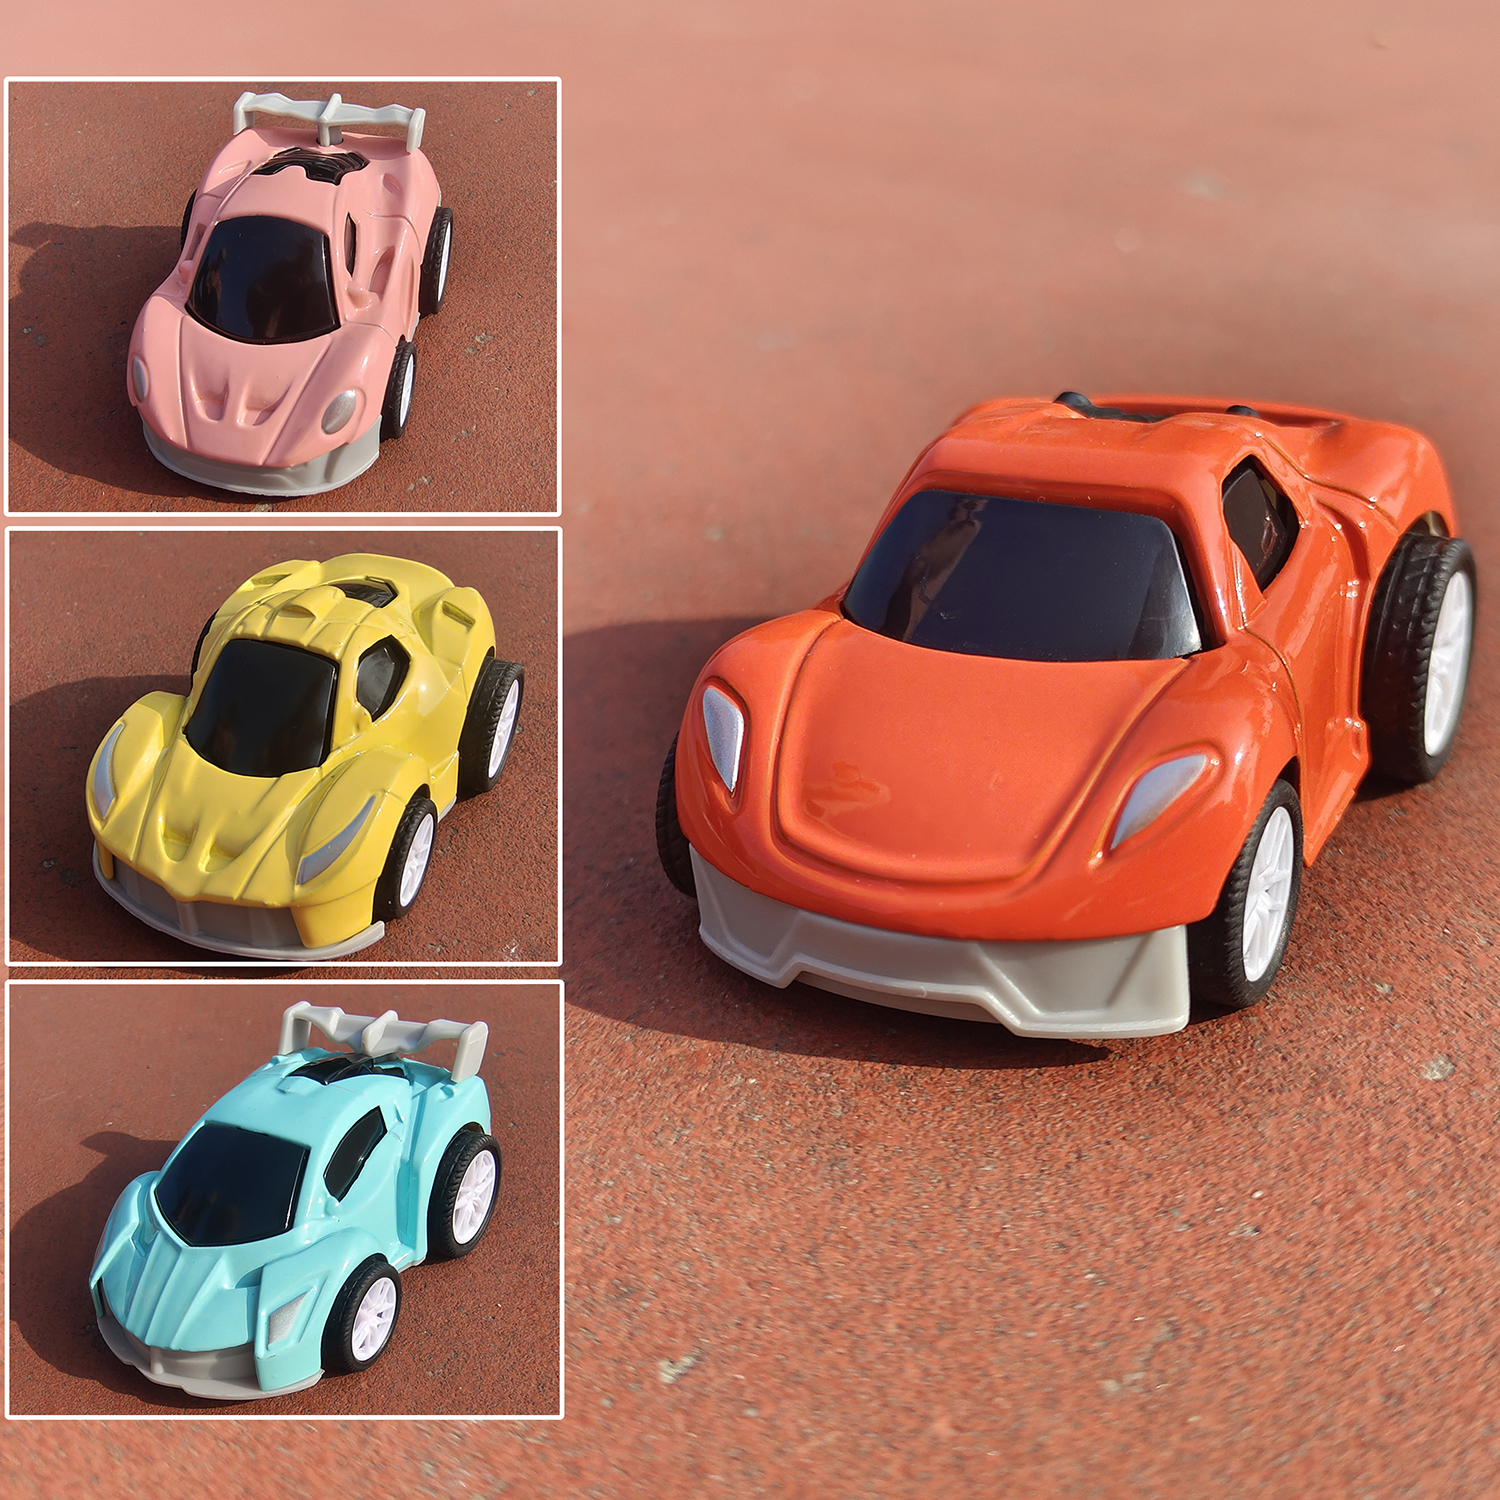 Carritos para niñas autos juguetes para jugar regalo new